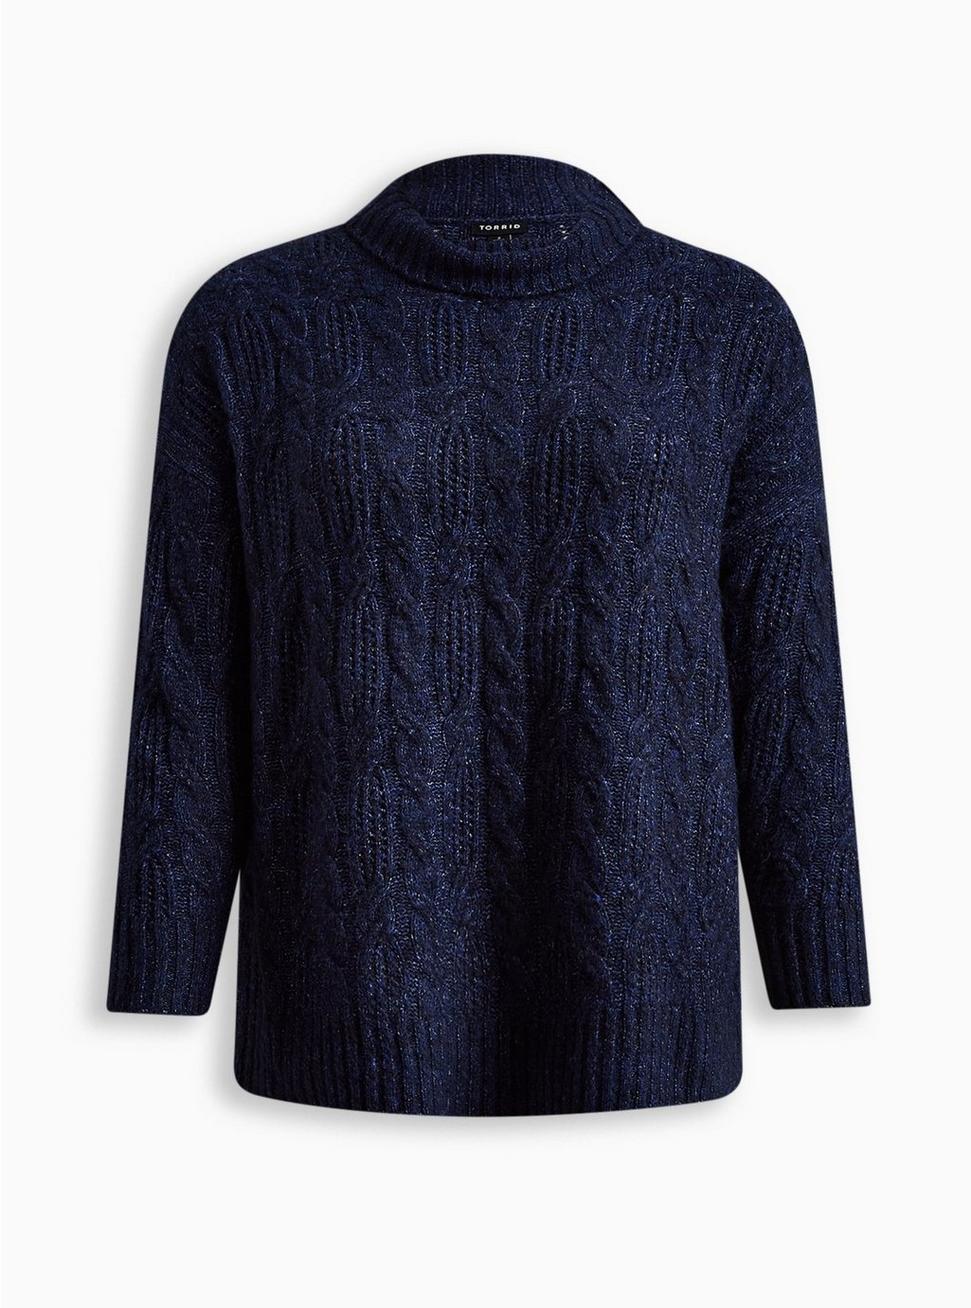 Plus Size Vegan Cashmere Pullover Turtle Neck Sweater, BLUE, hi-res